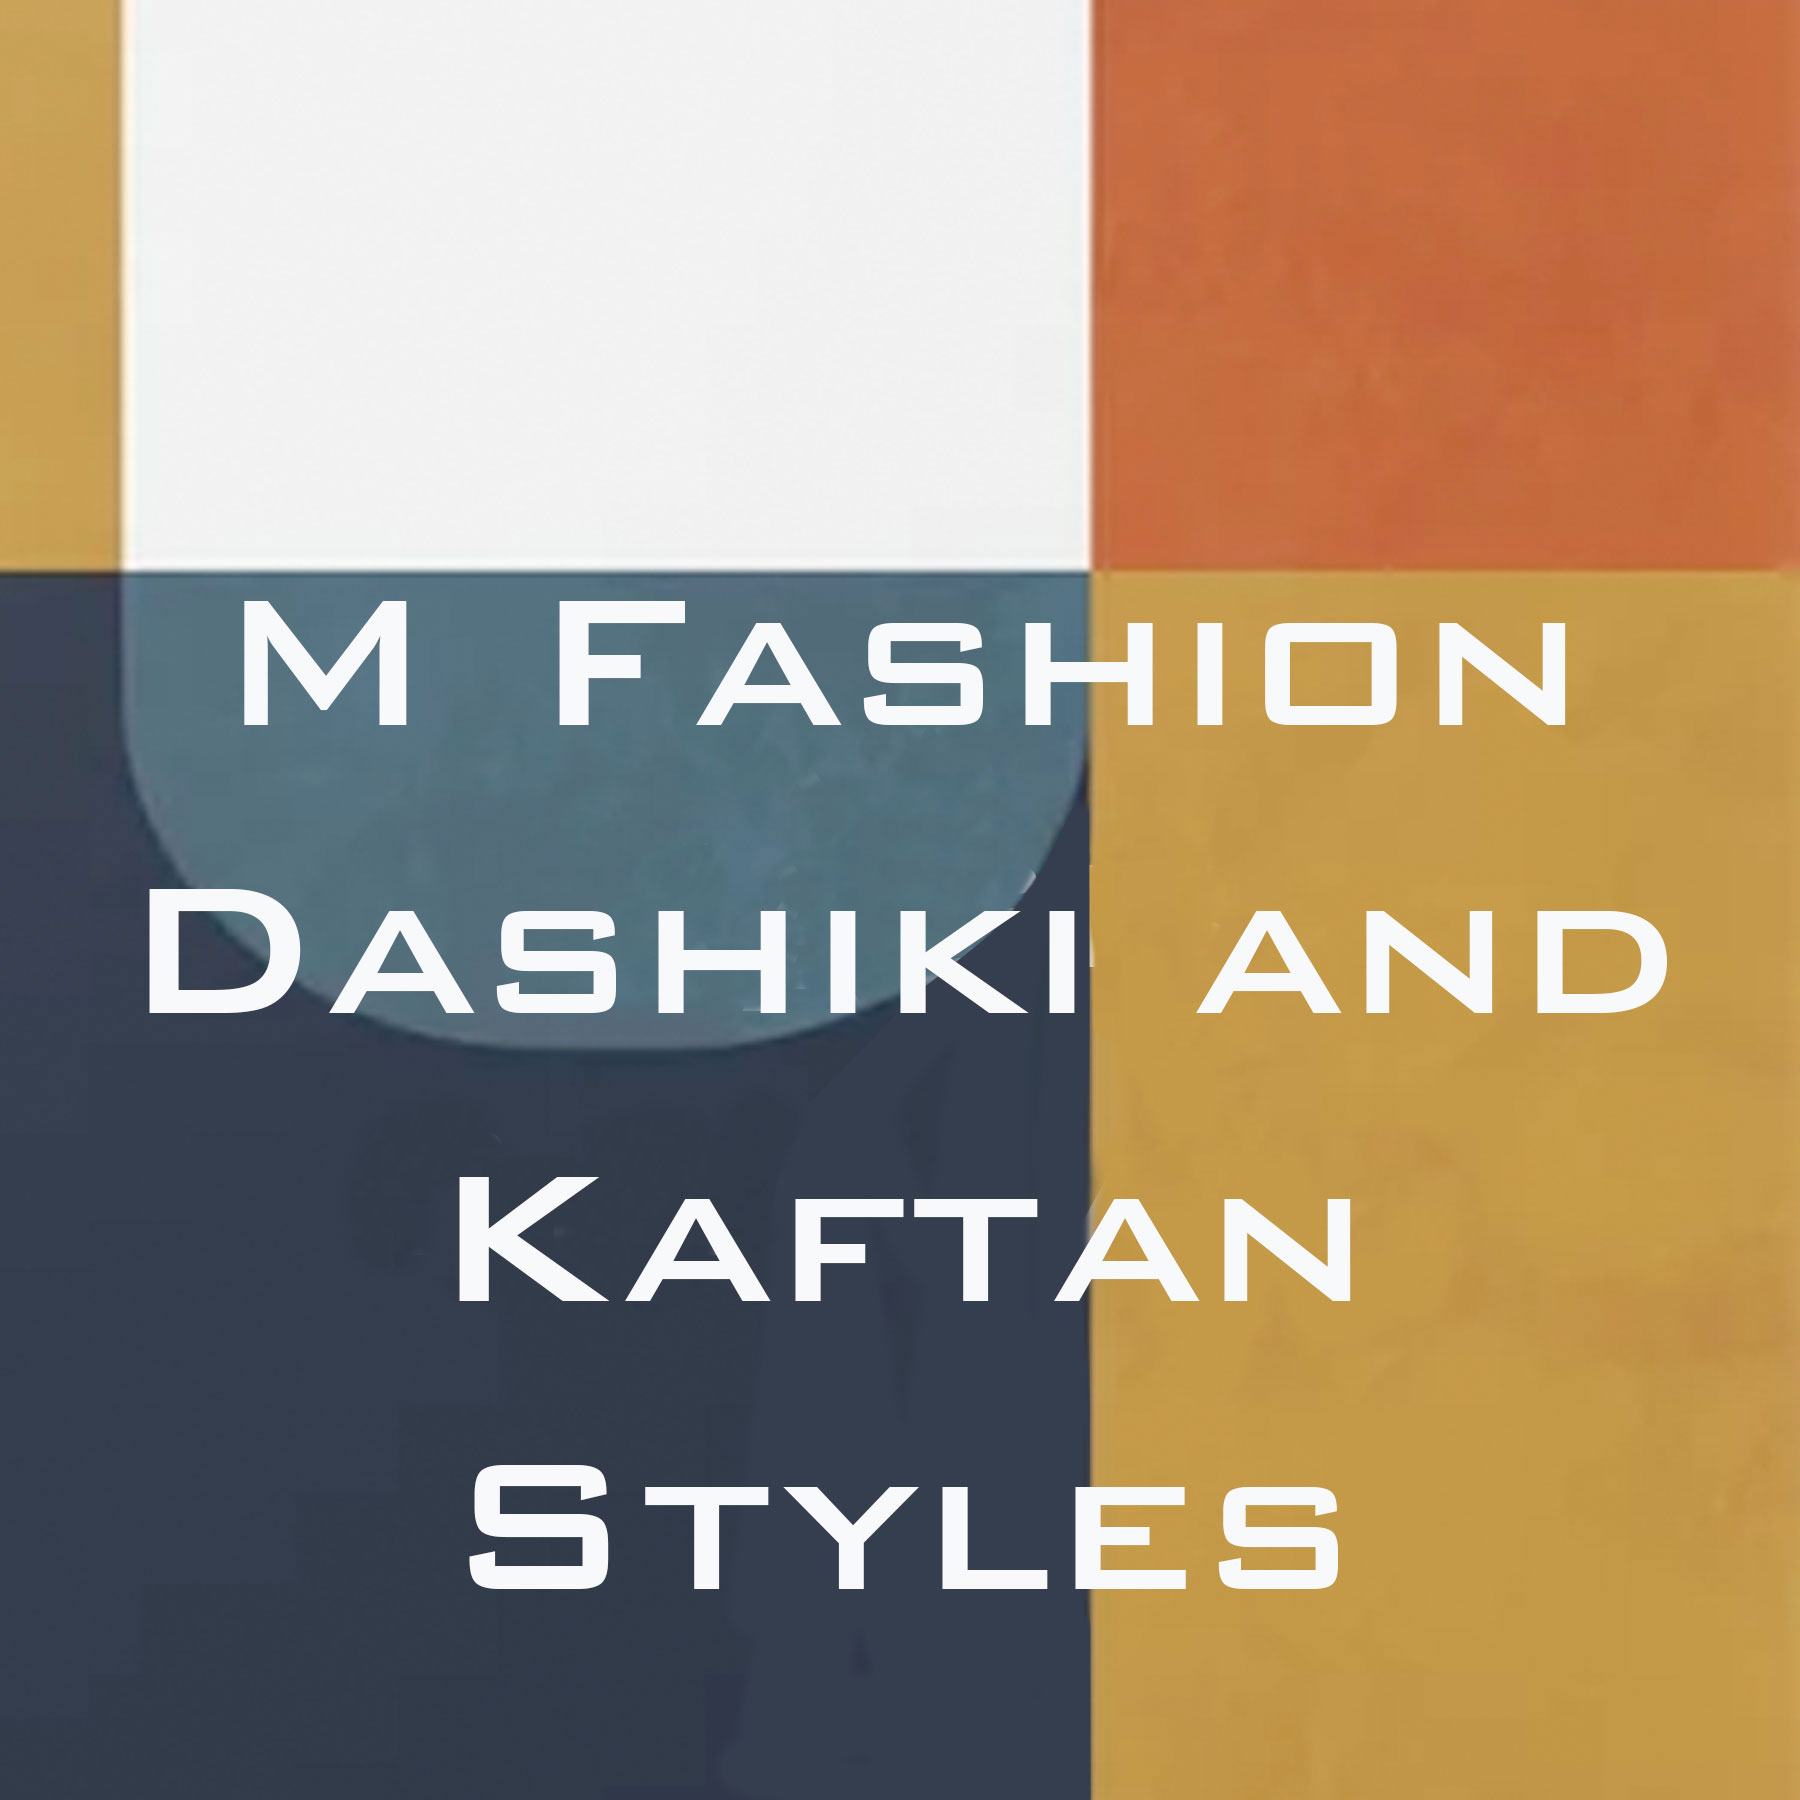 Kaftans and Dashiki Style Tops